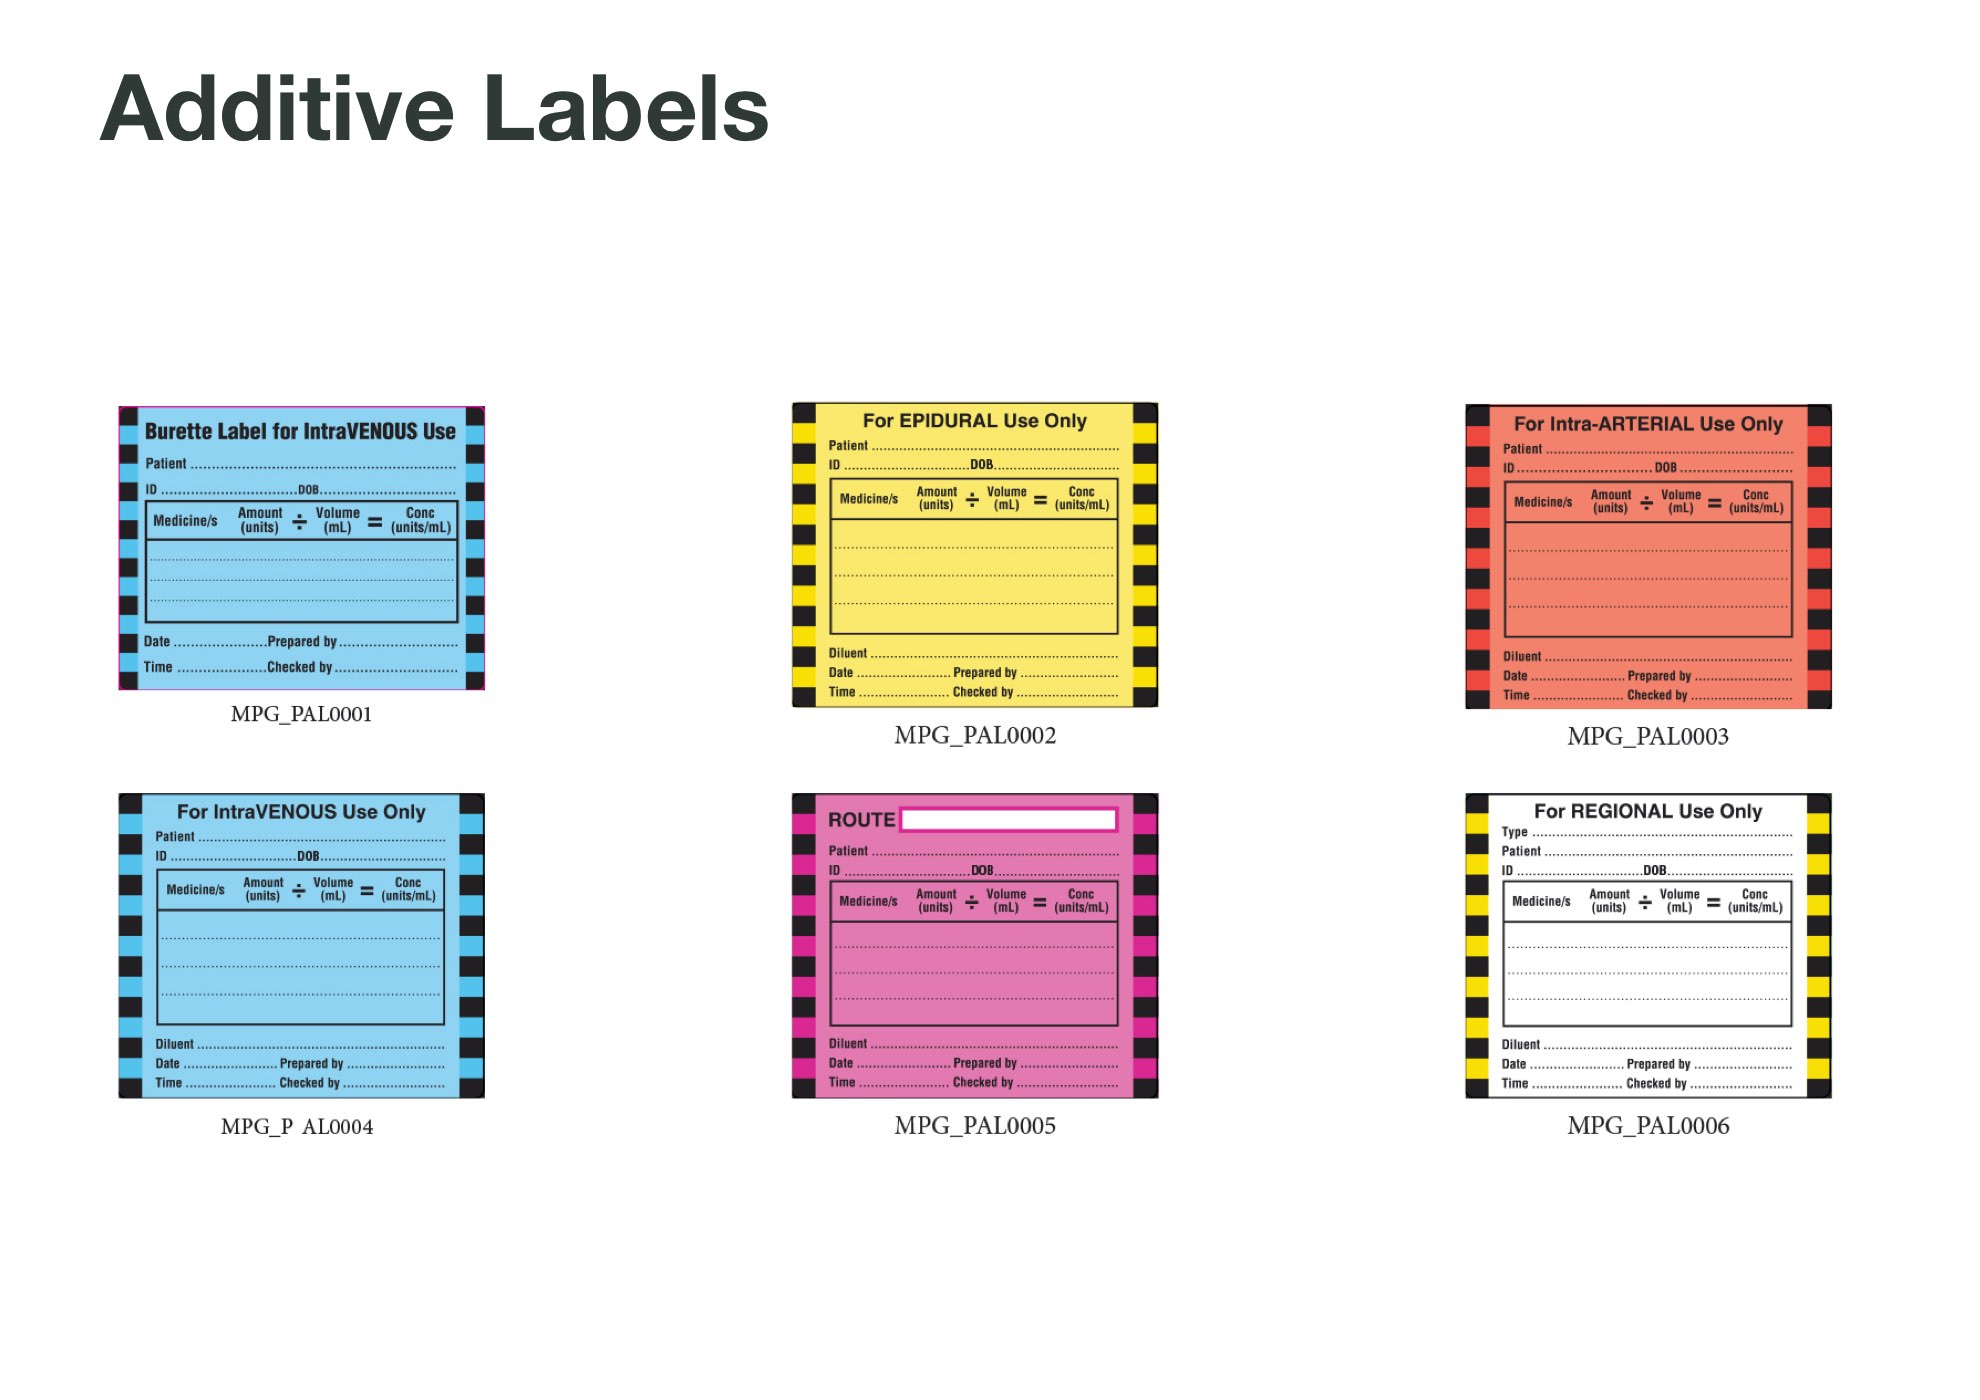 Additive labels